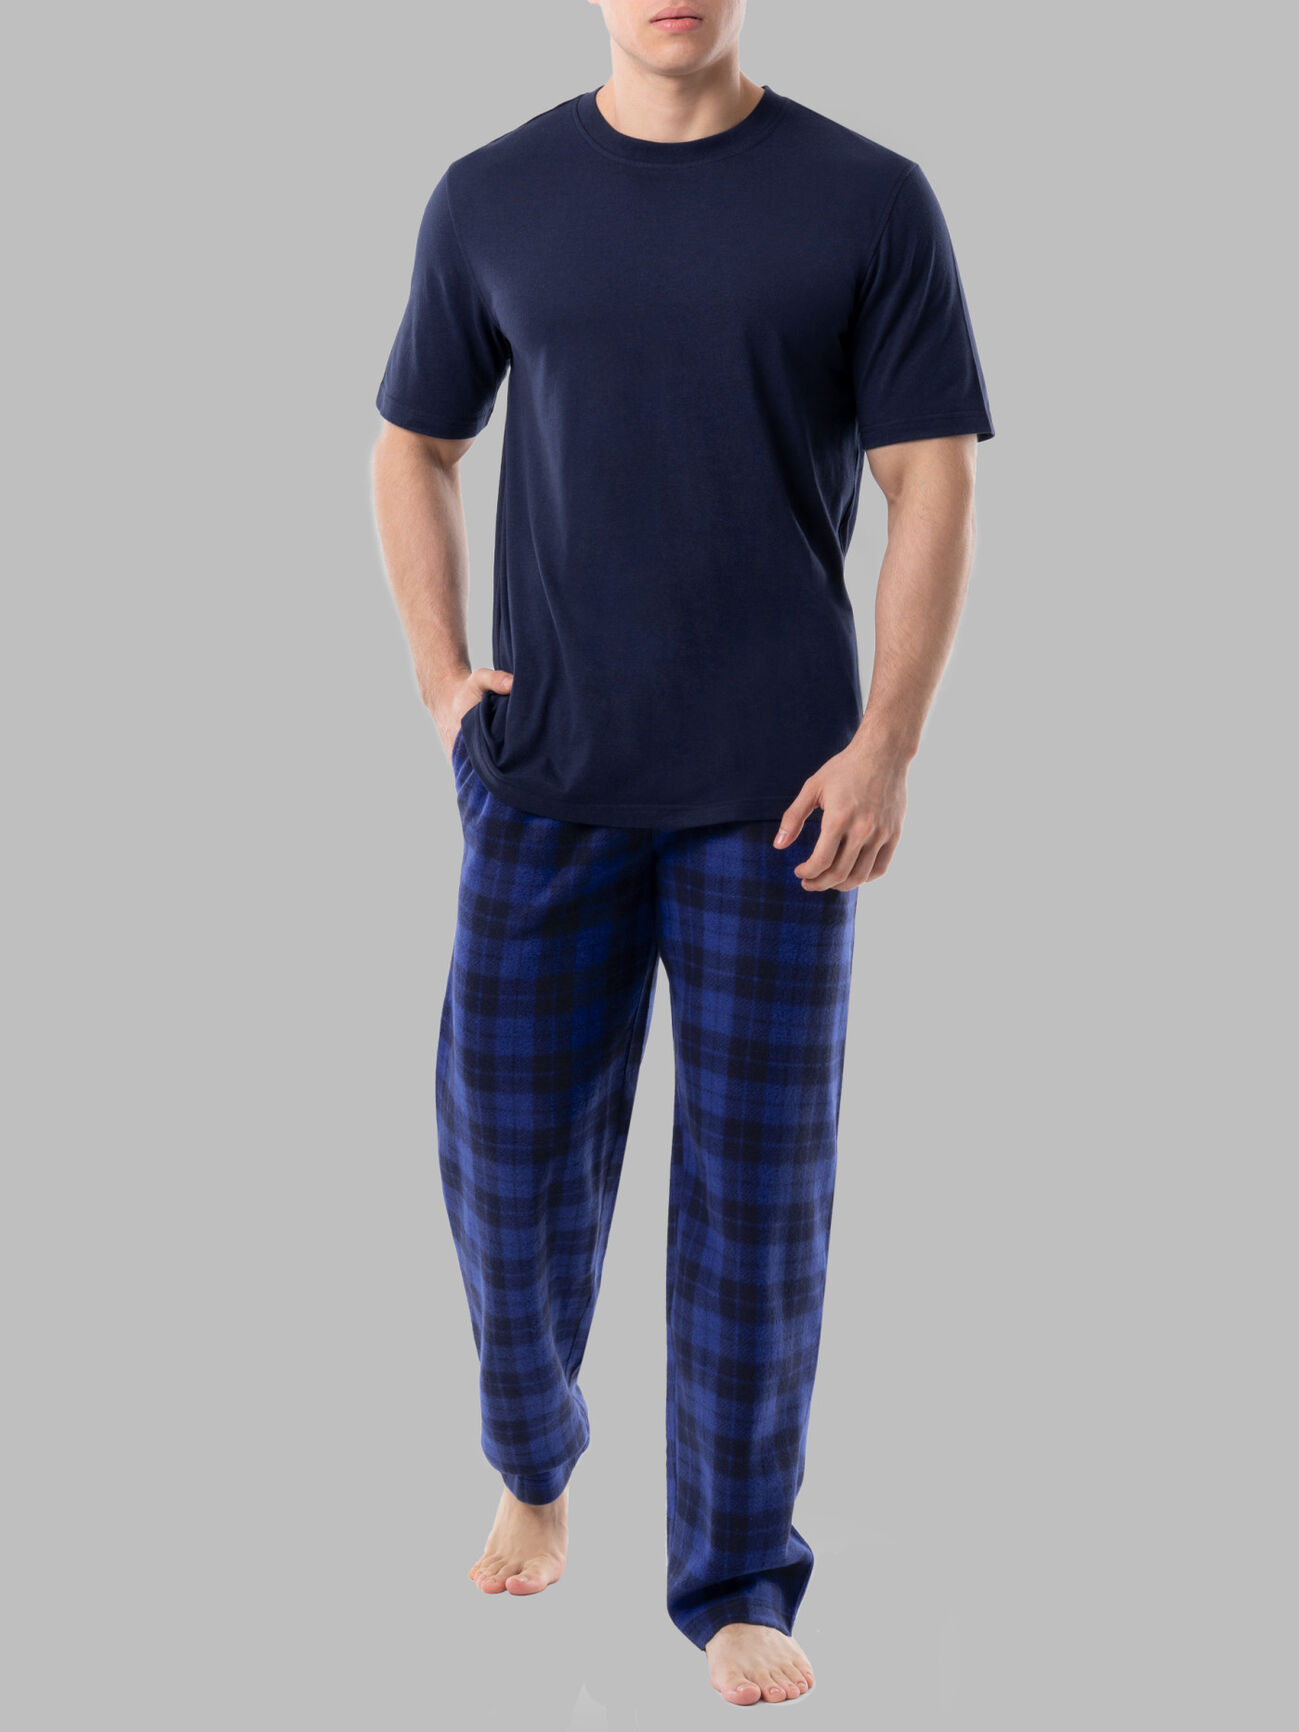 100% Cotton Jersey Knit Women Pajama Pants Sleepwear